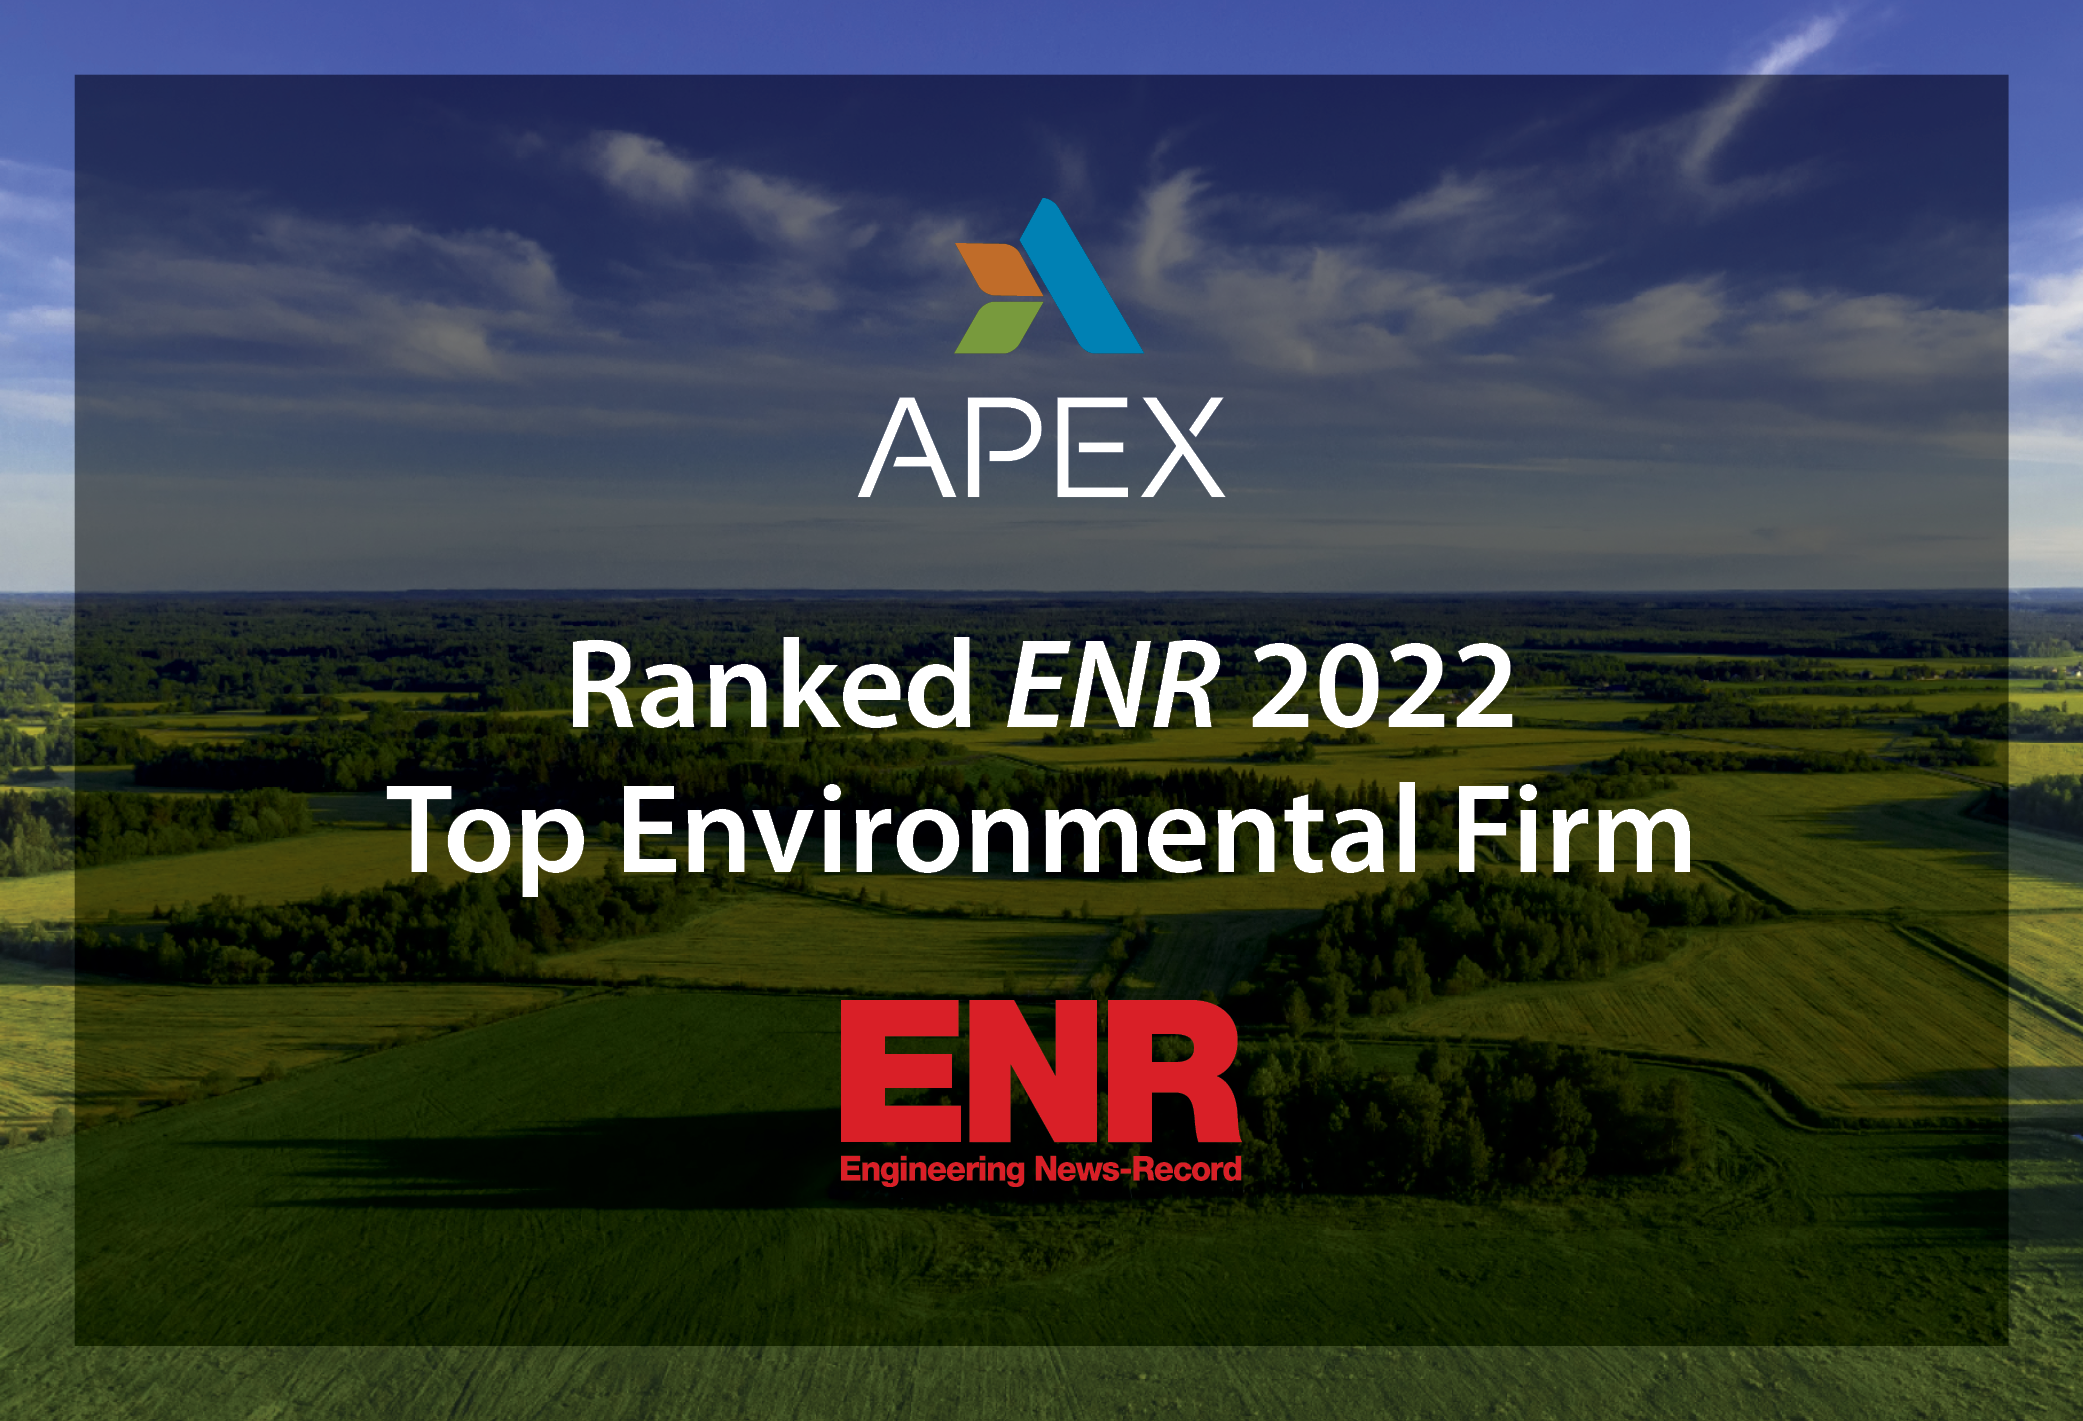 Apex Ranked ENR 2022 Top Environmental Firm